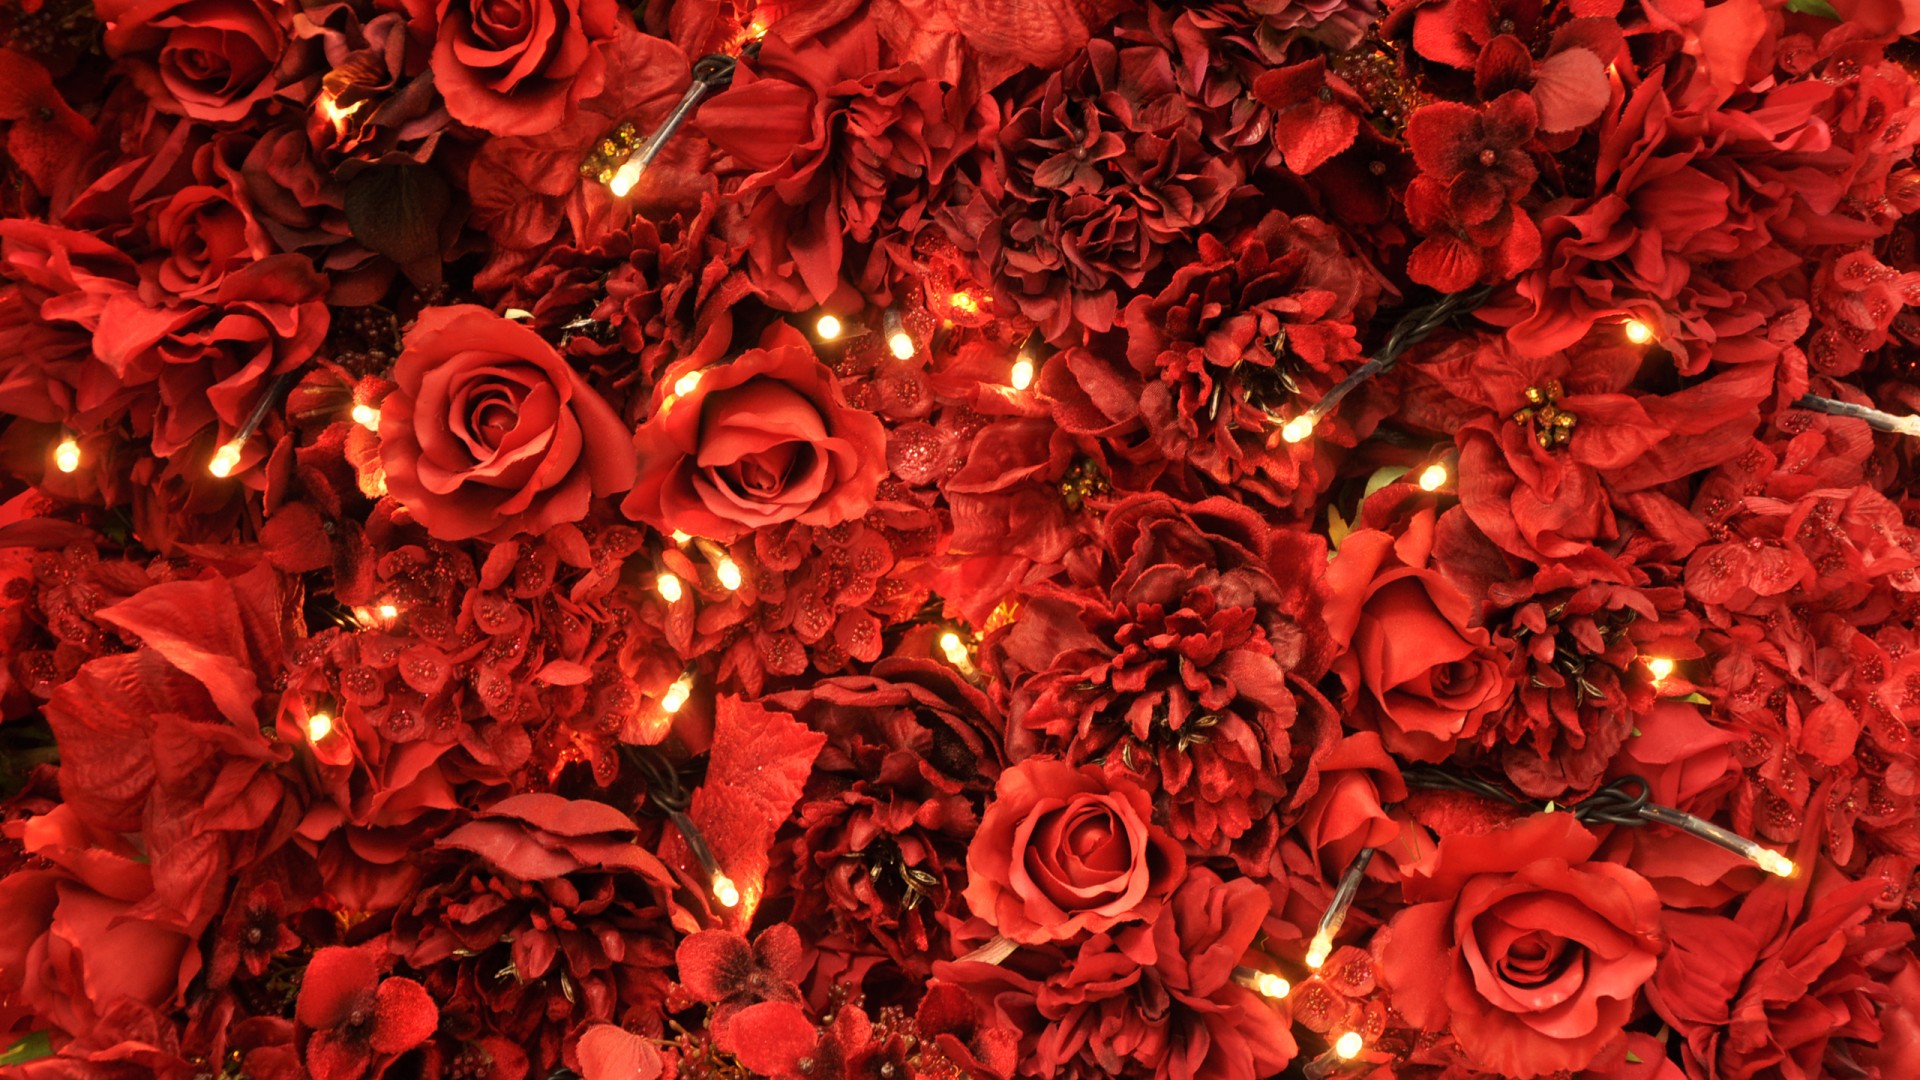 HD Flower Wallpaper Red Roses Lights 1920x1080